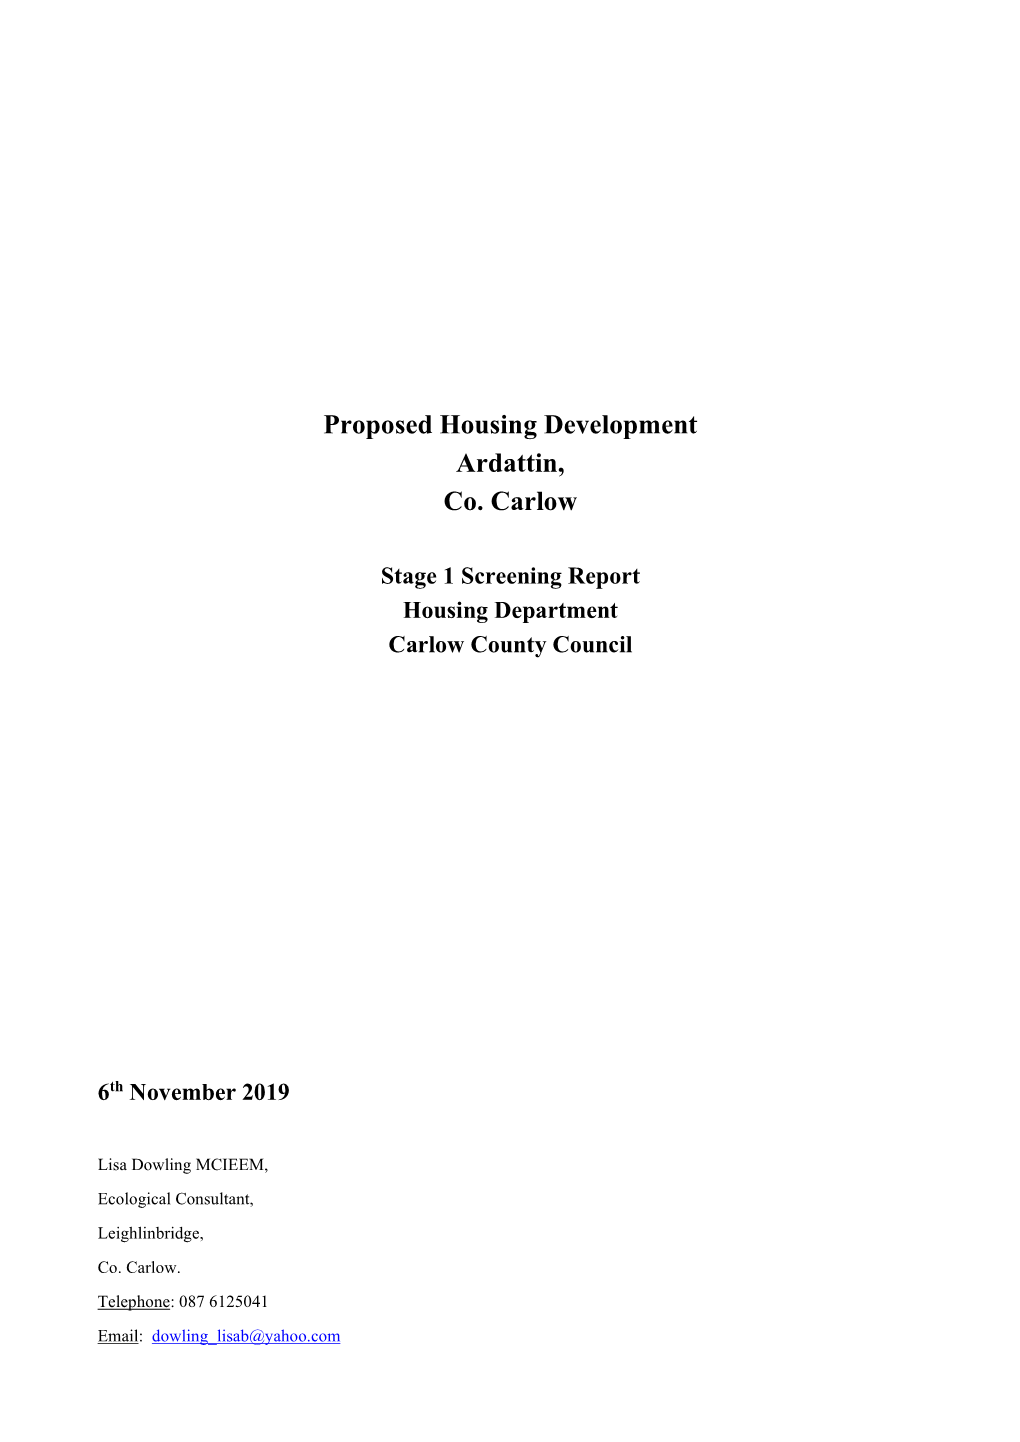 Proposed Housing Development Ardattin, Co. Carlow